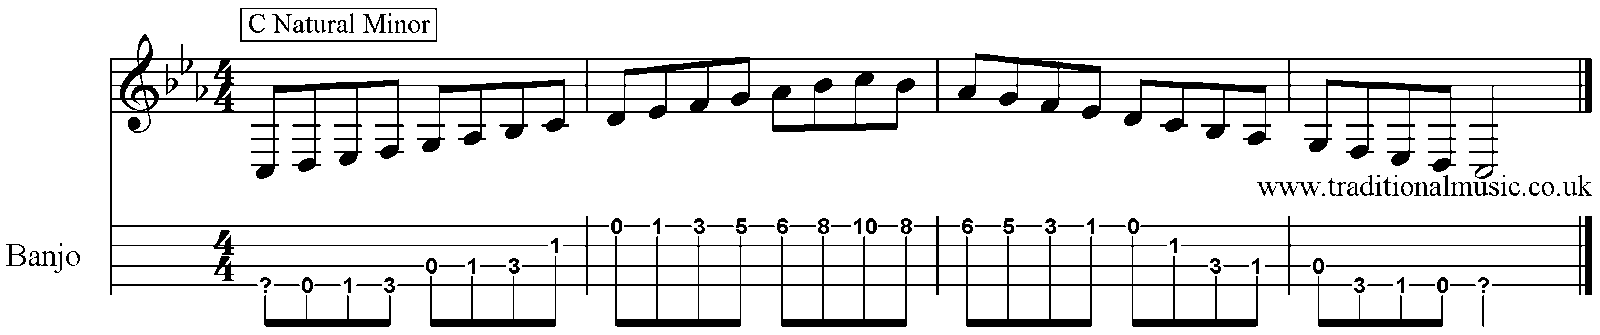 Minor Scales for Banjo C 